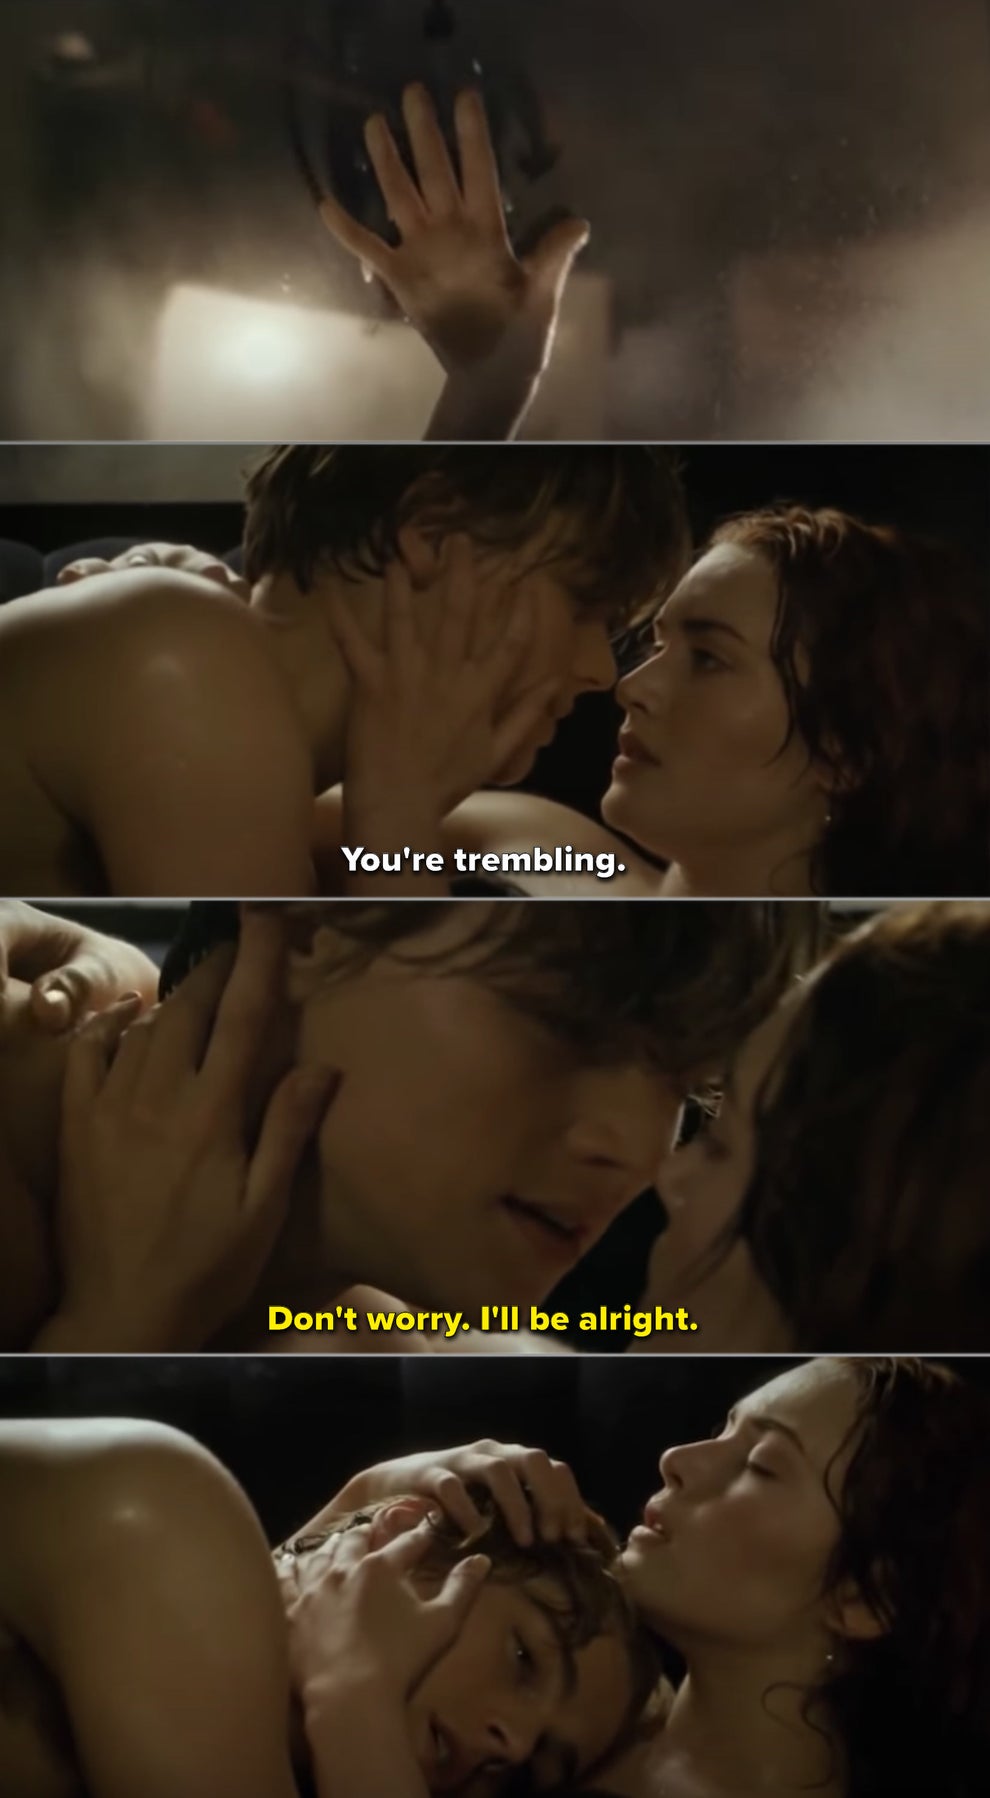 The best erotic scenes